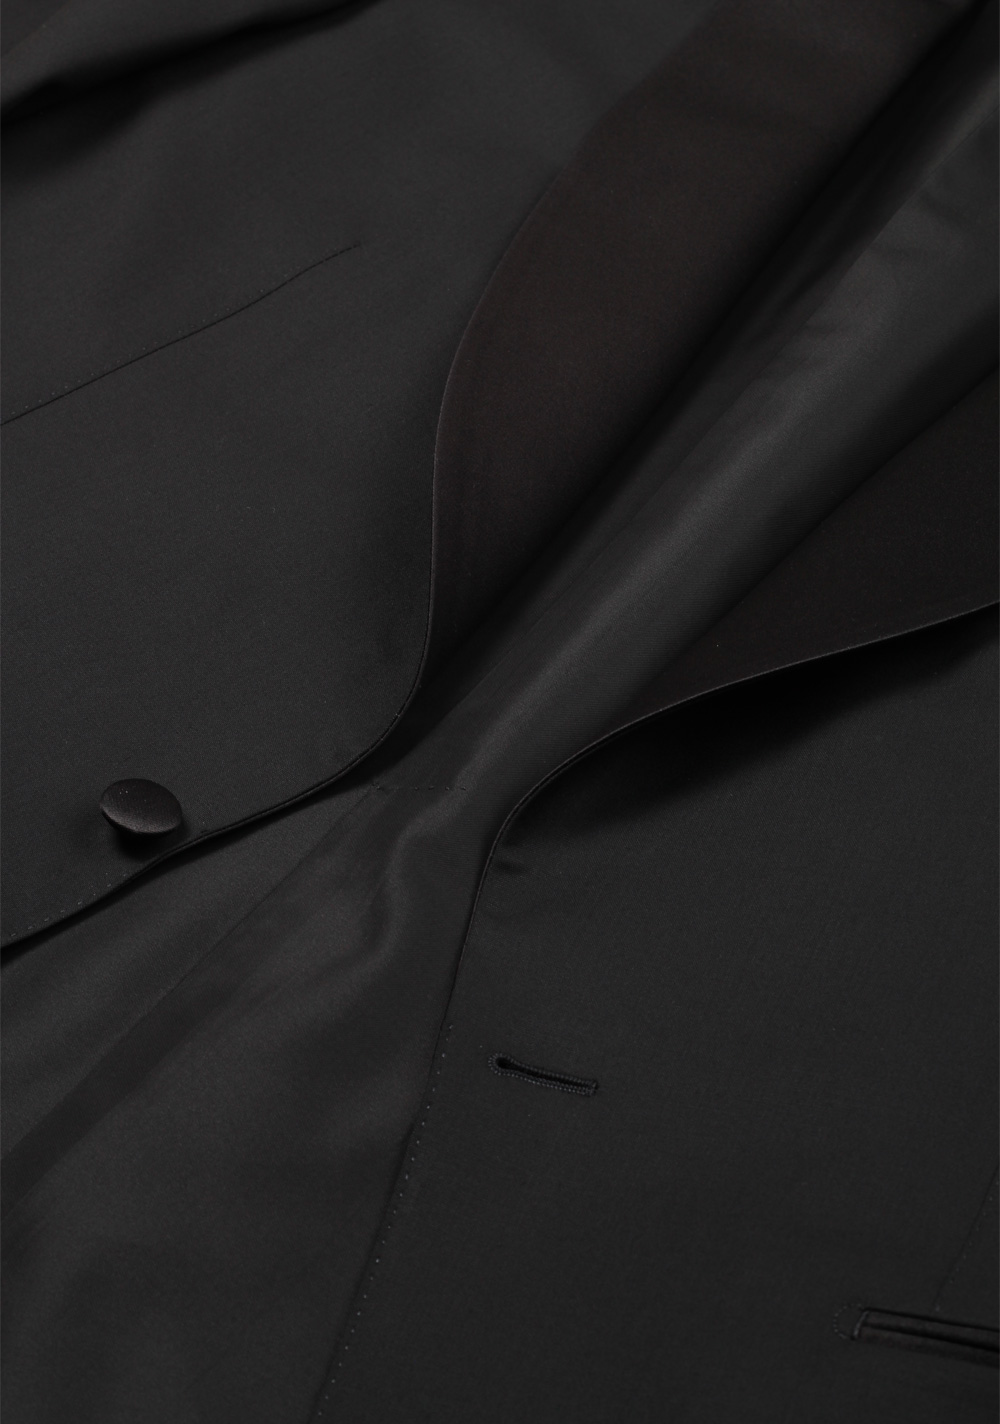 TOM FORD Windsor Shawl Collar Black Tuxedo Suit Smoking Size 48 / 38R U ...